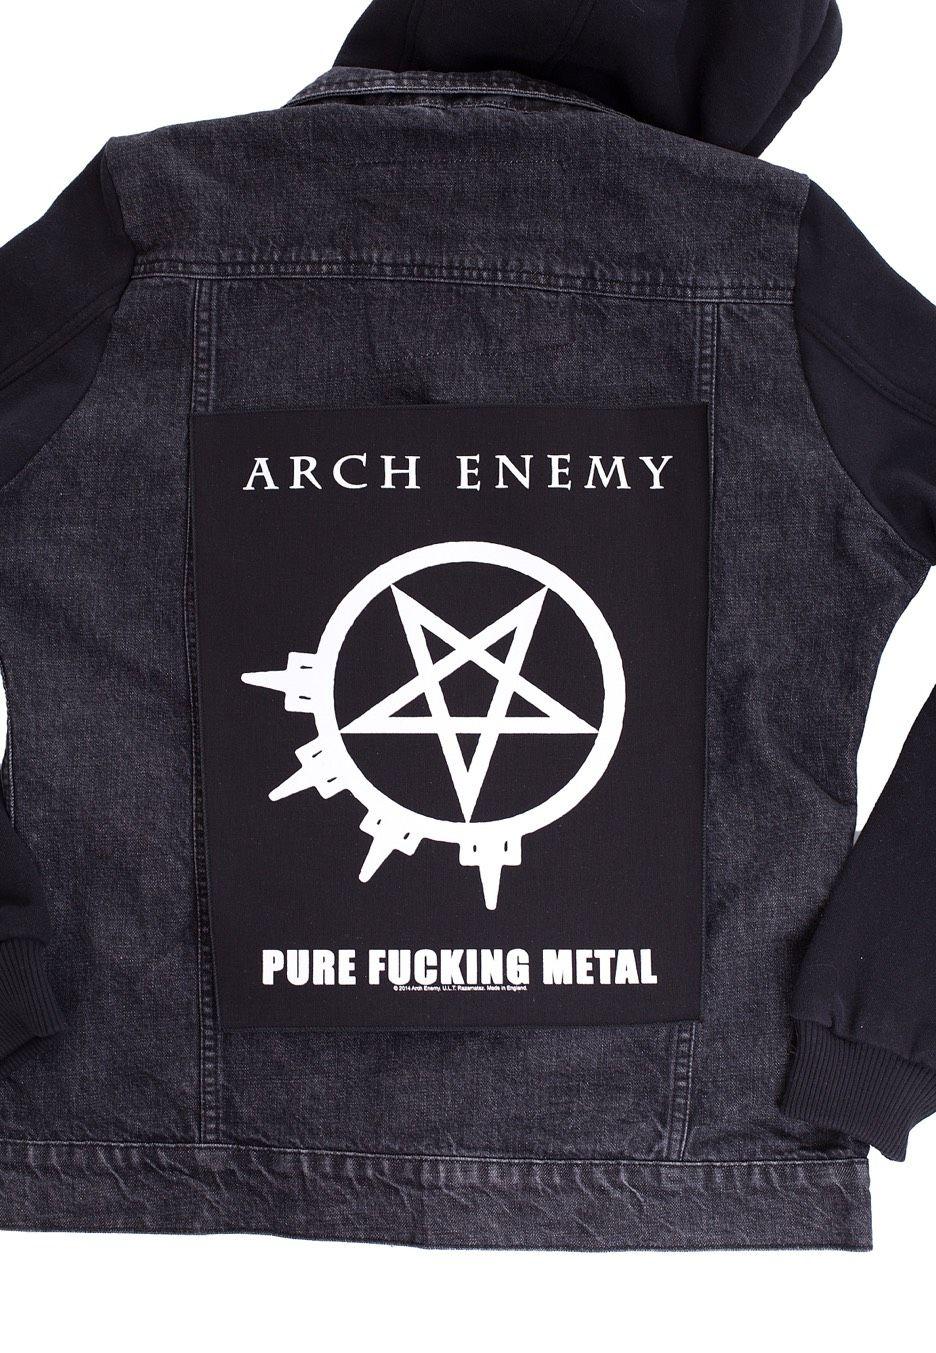 Arch Enemy Logo - Arch Enemy Fucking Metal Metal